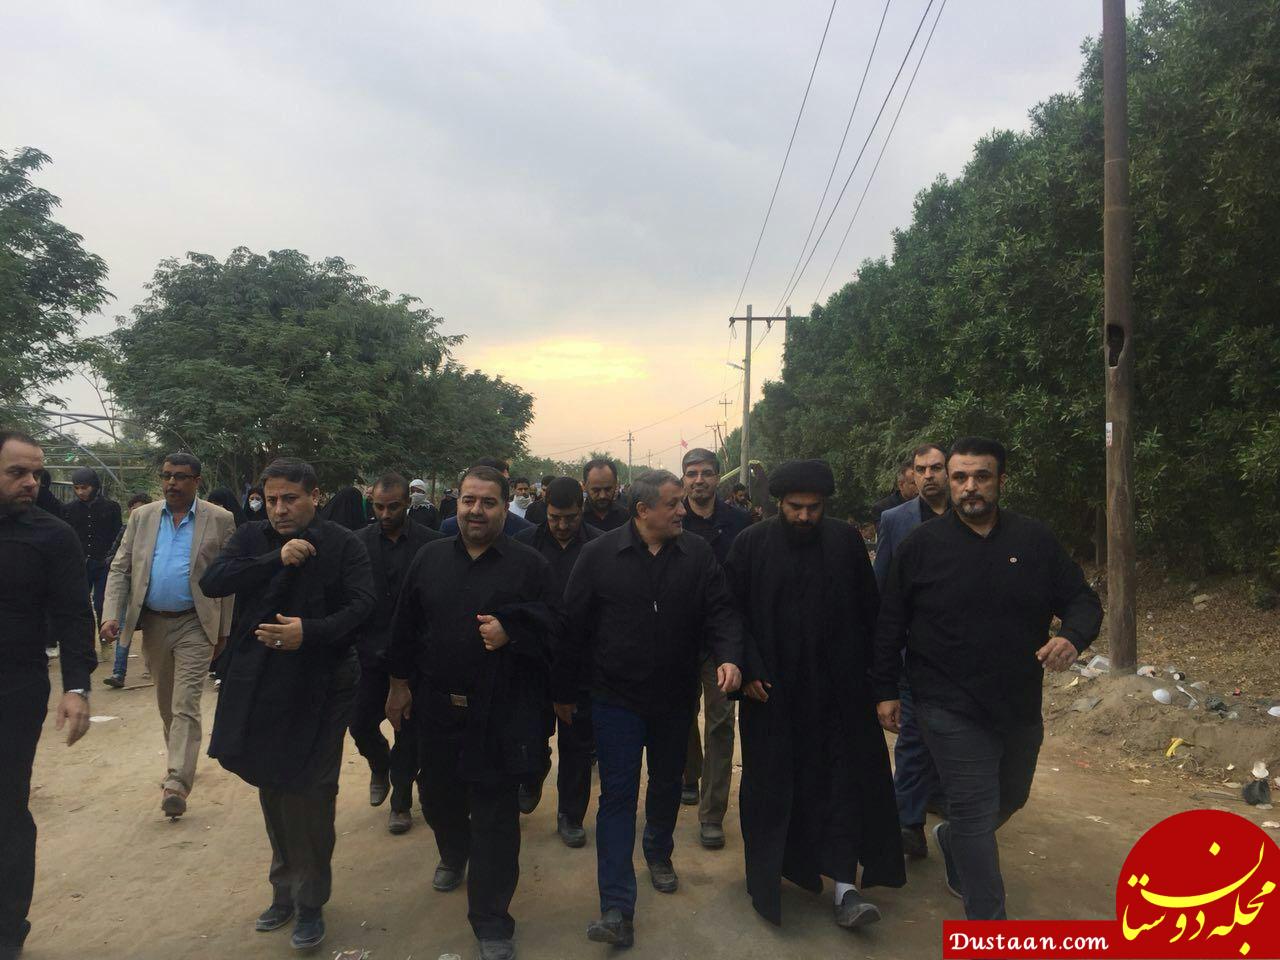 www.dustaan.com-محسن هاشمی، سالاری و فراهانی در پیاده روی اربعین مسیر نجف به کربلا +عکس